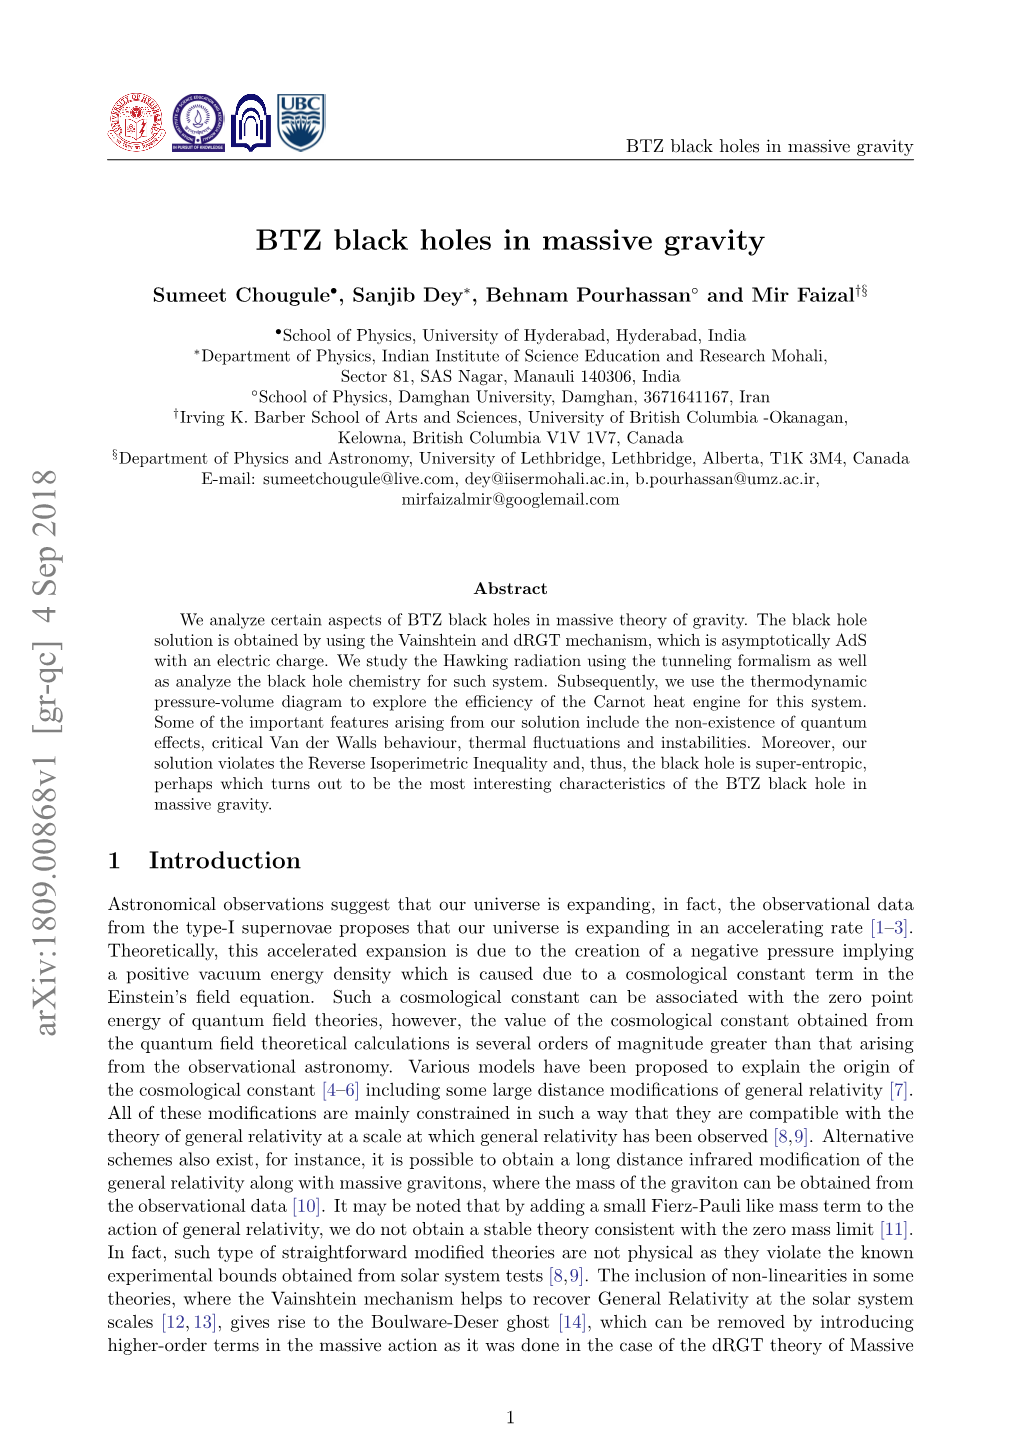 BTZ Black Holes in Massive Gravity